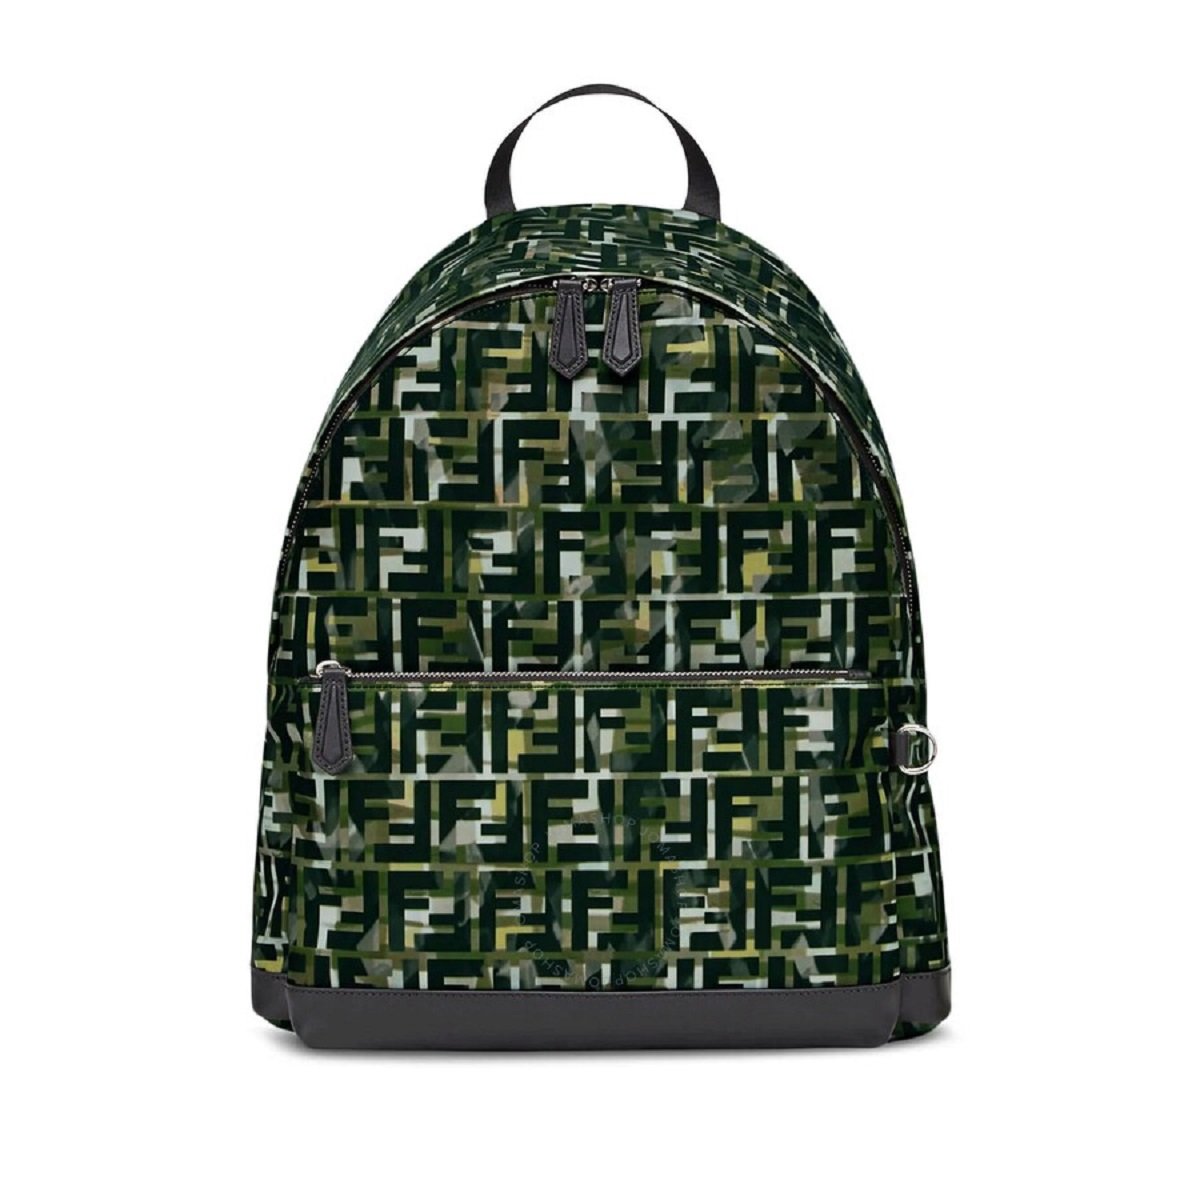 New Fendi F is Fendi Asparago Leather Mini Chain Wallet Bag 8M0408 